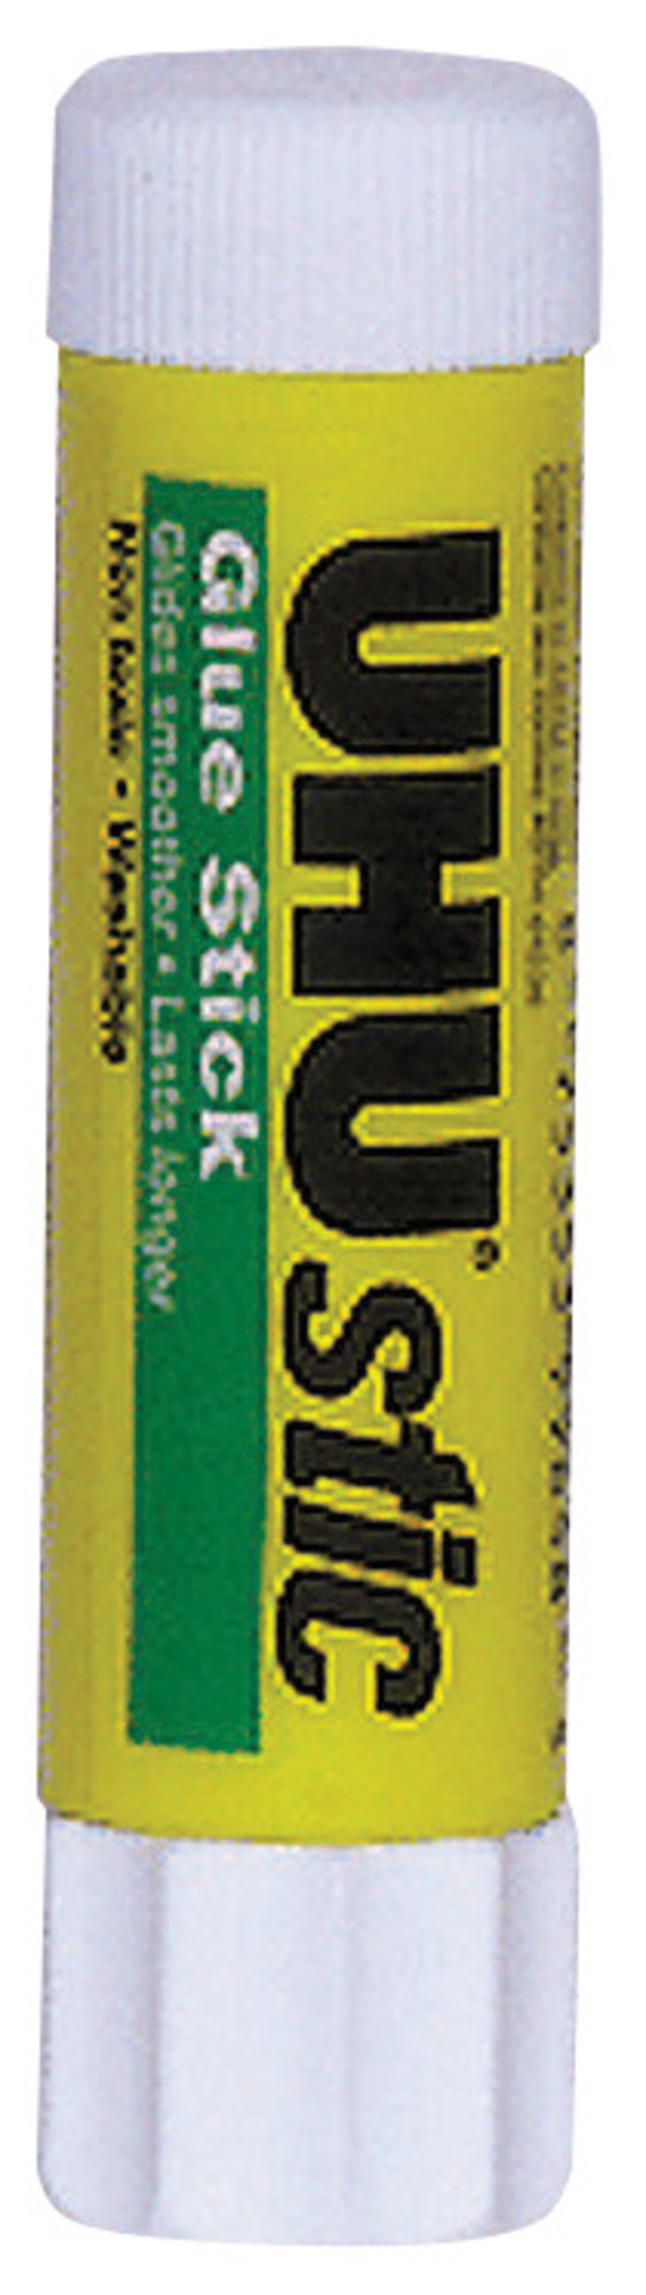 Glue Sticks, Item Number 027767